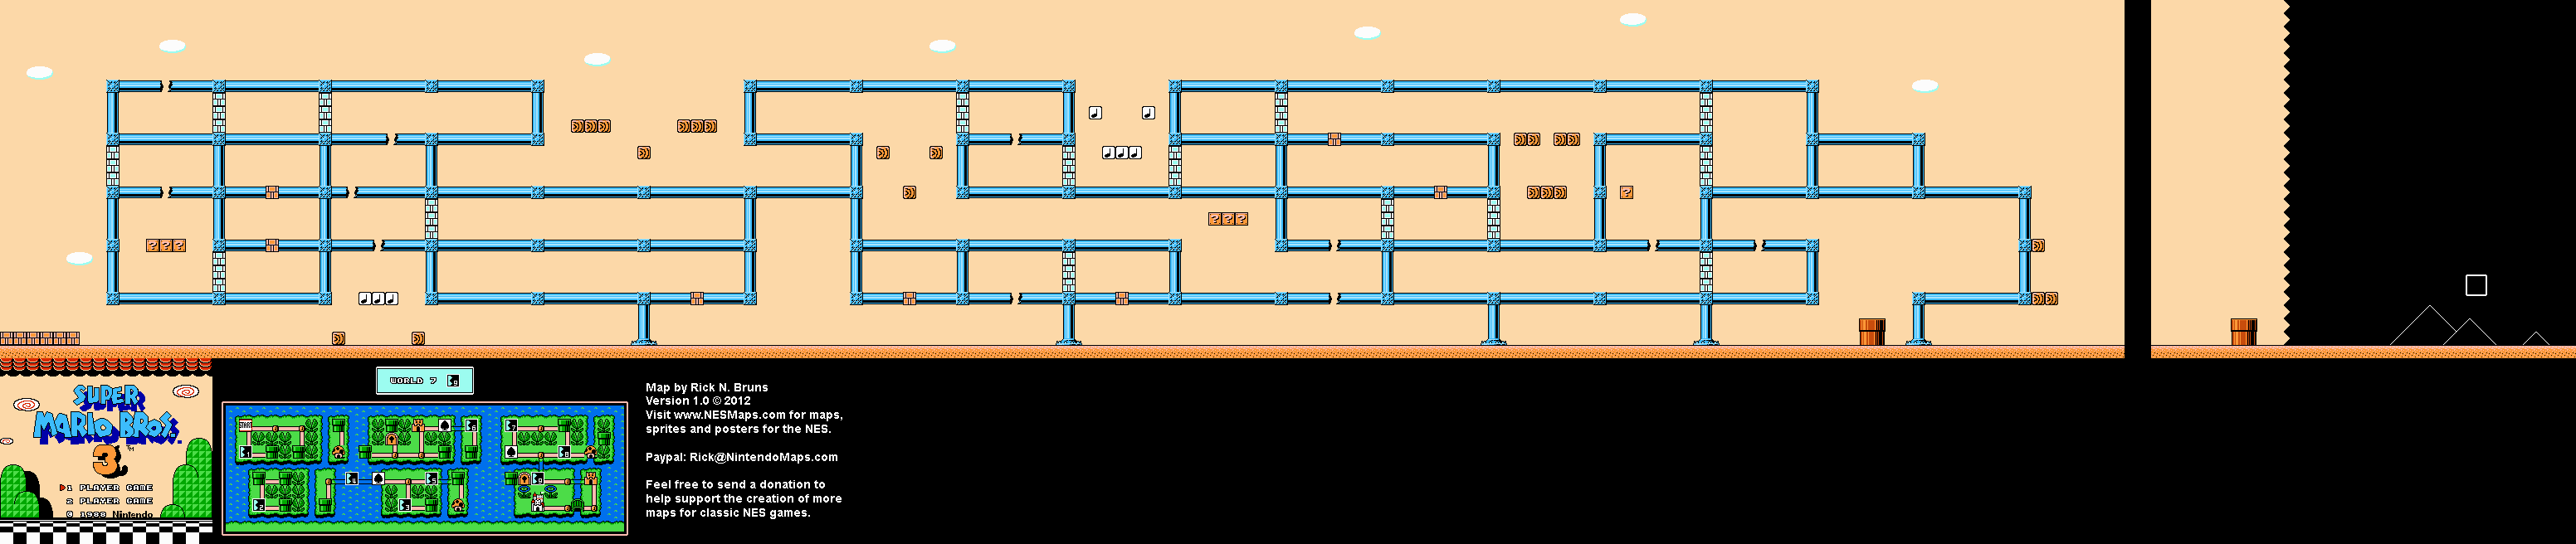 Super Mario Brothers 3 - World 7-9 Nintendo NES Map BG